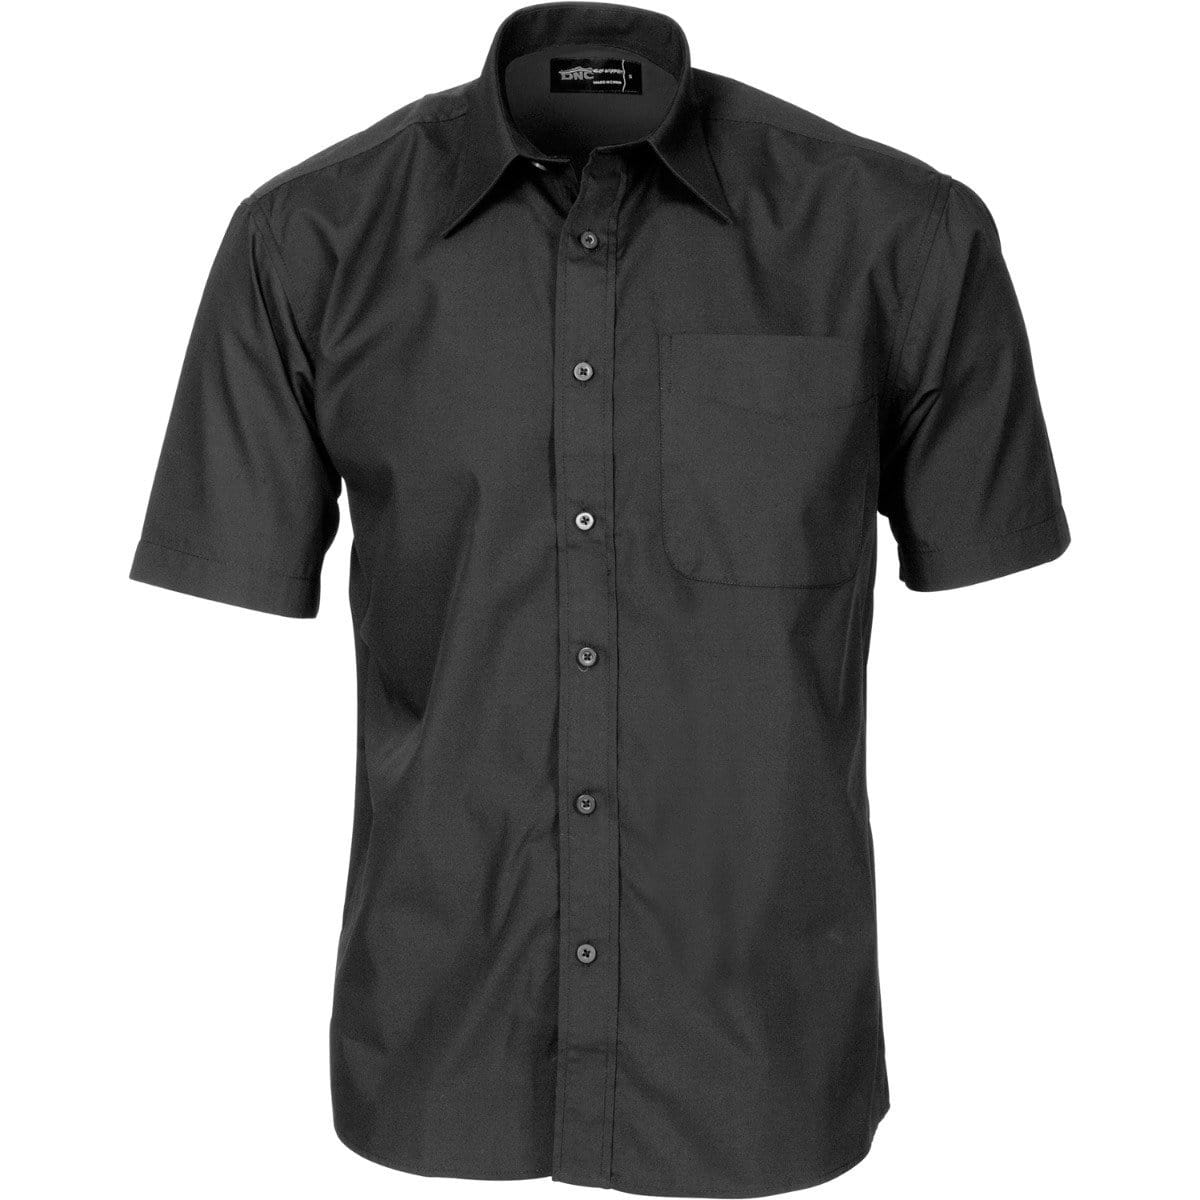 Dnc Workwear Polyester Cotton Short Sleeve Business Shirt - 4131 Corporate Wear DNC Workwear Black S 